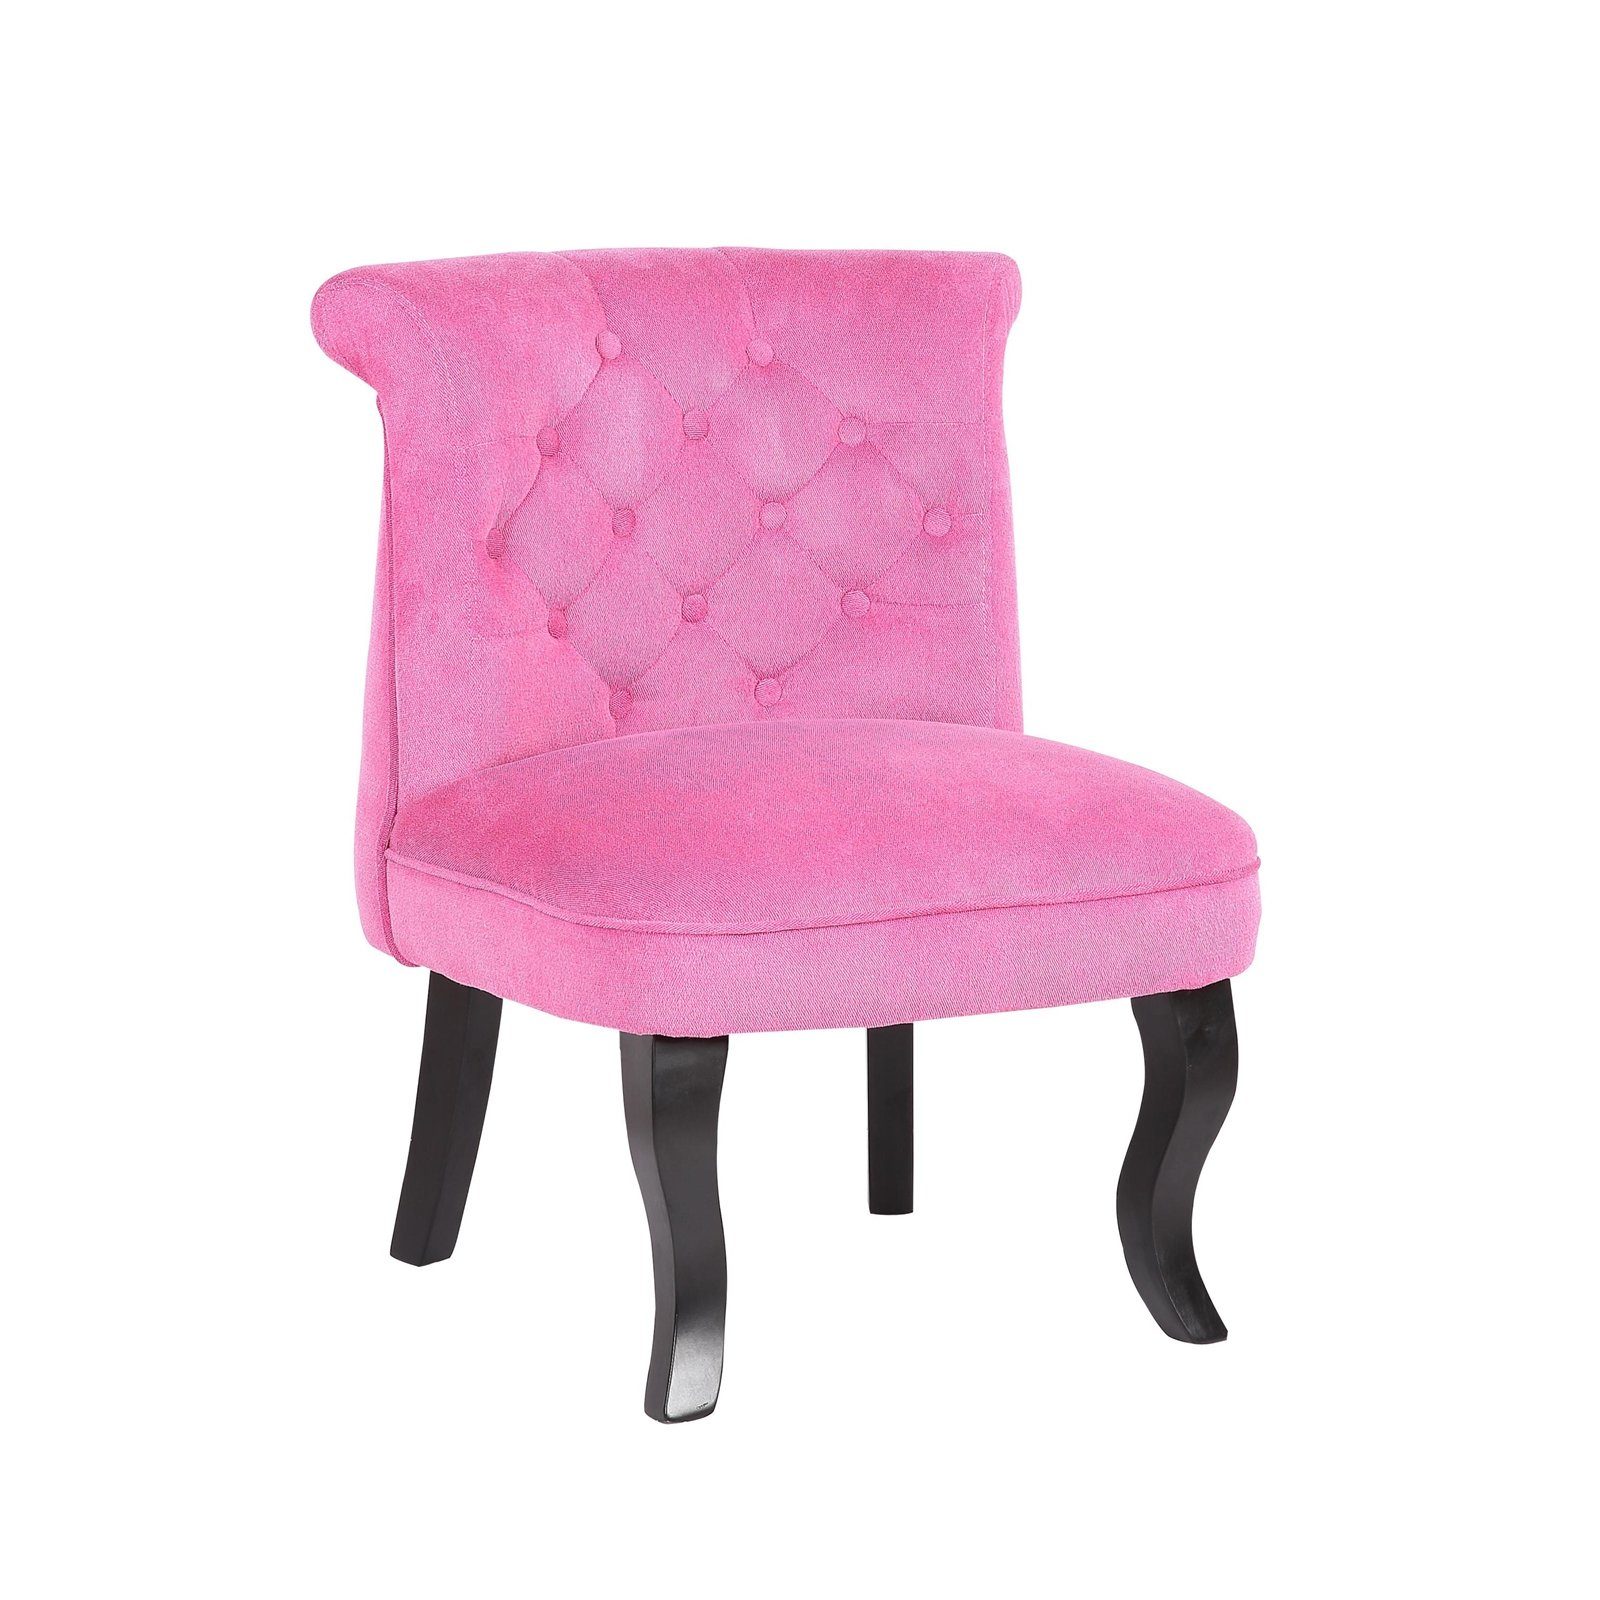 Französischer Polsterstuhl Ankleidesessel HTI-Line Pink Sessel Antoinette,